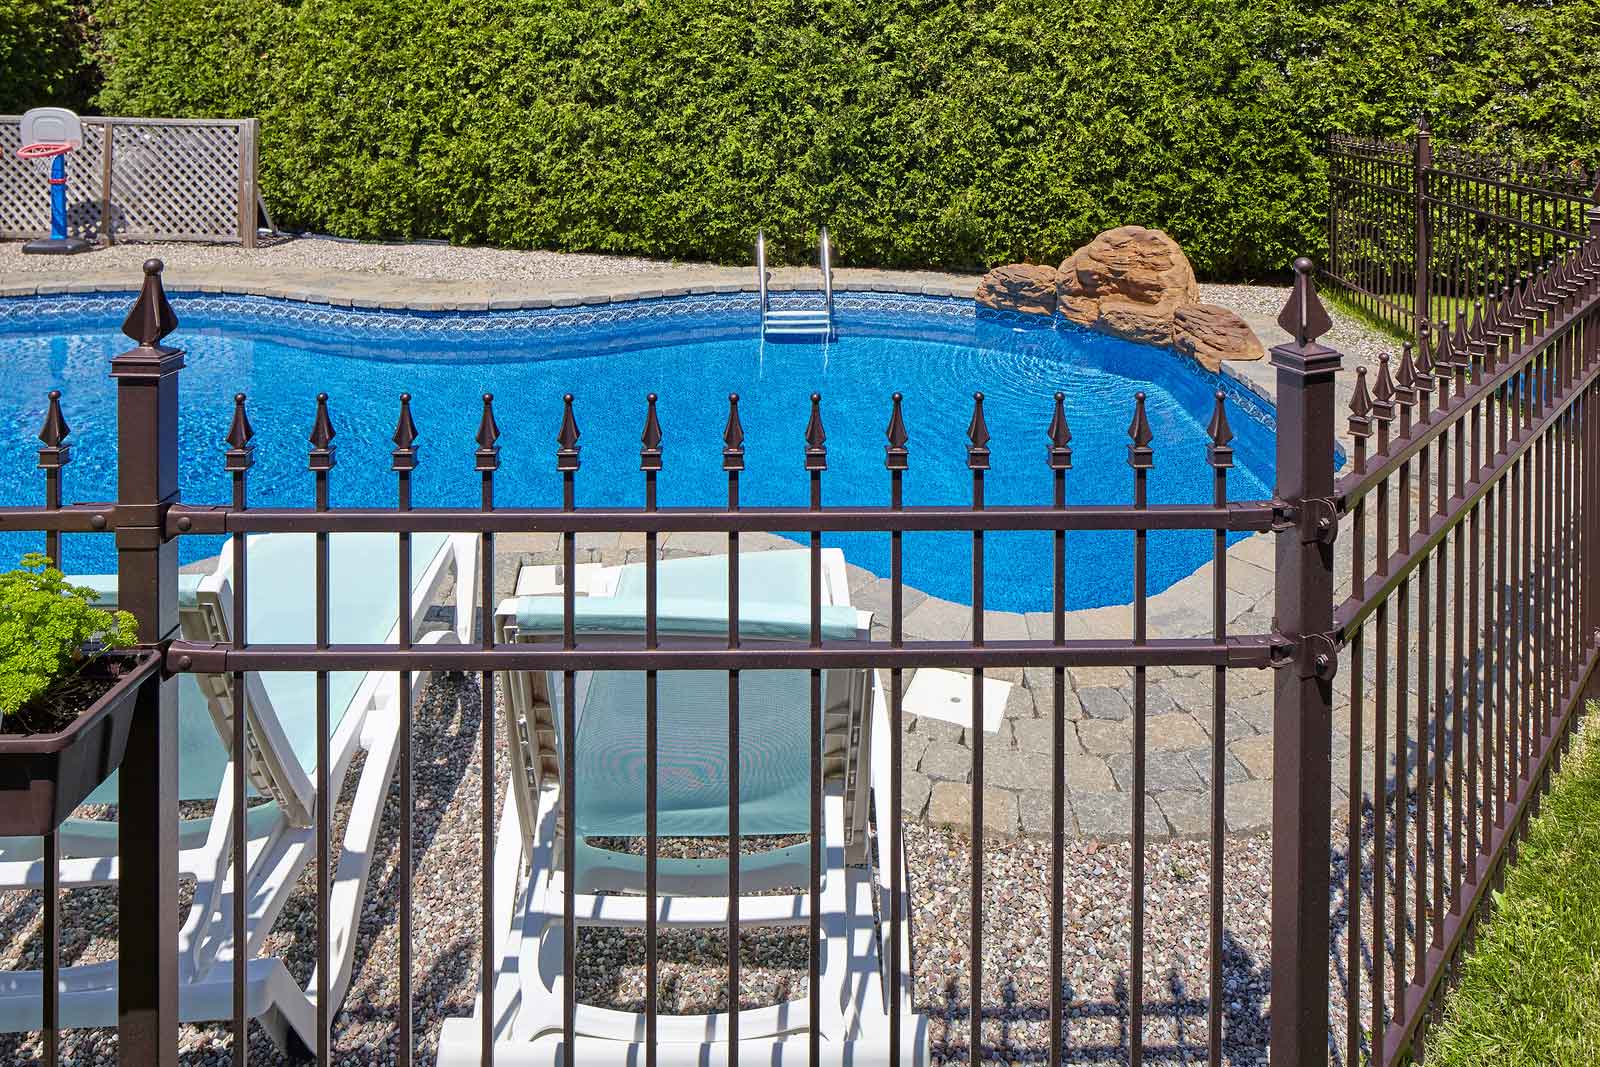 Ensure all backyard pools have fencing